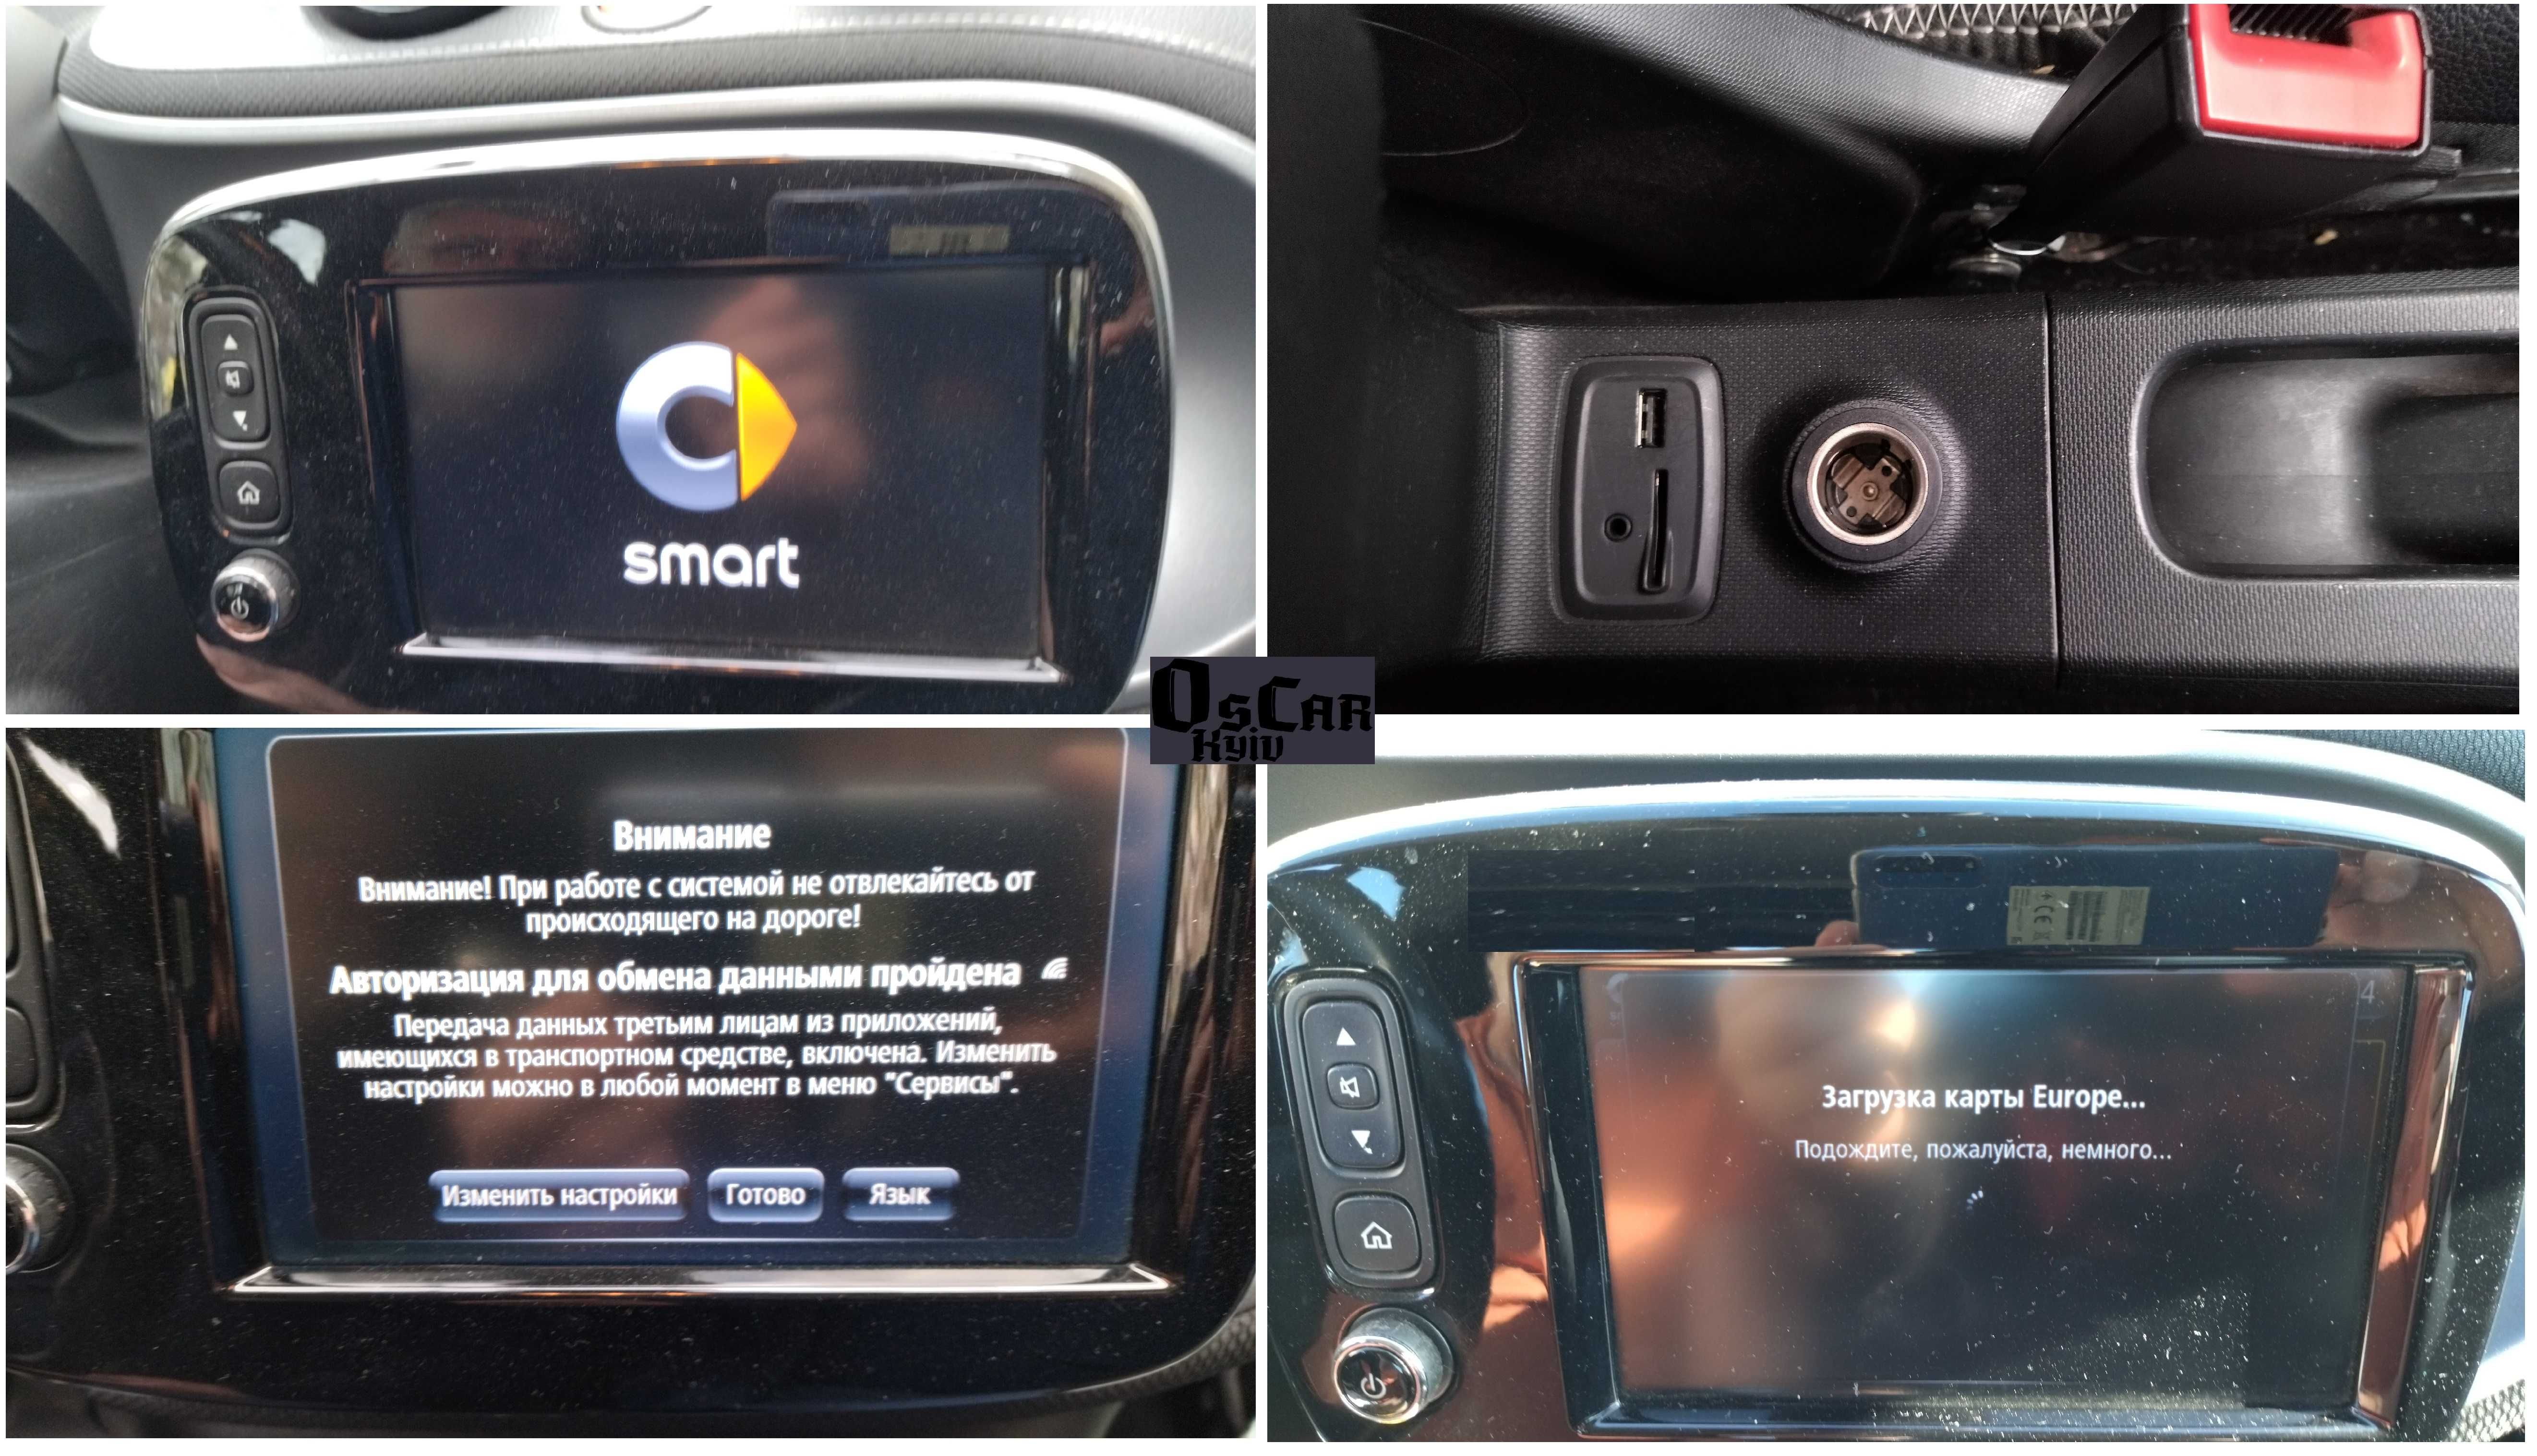 SD карта навигации для Suzuki, Renault, Smart Fortwo 453/454